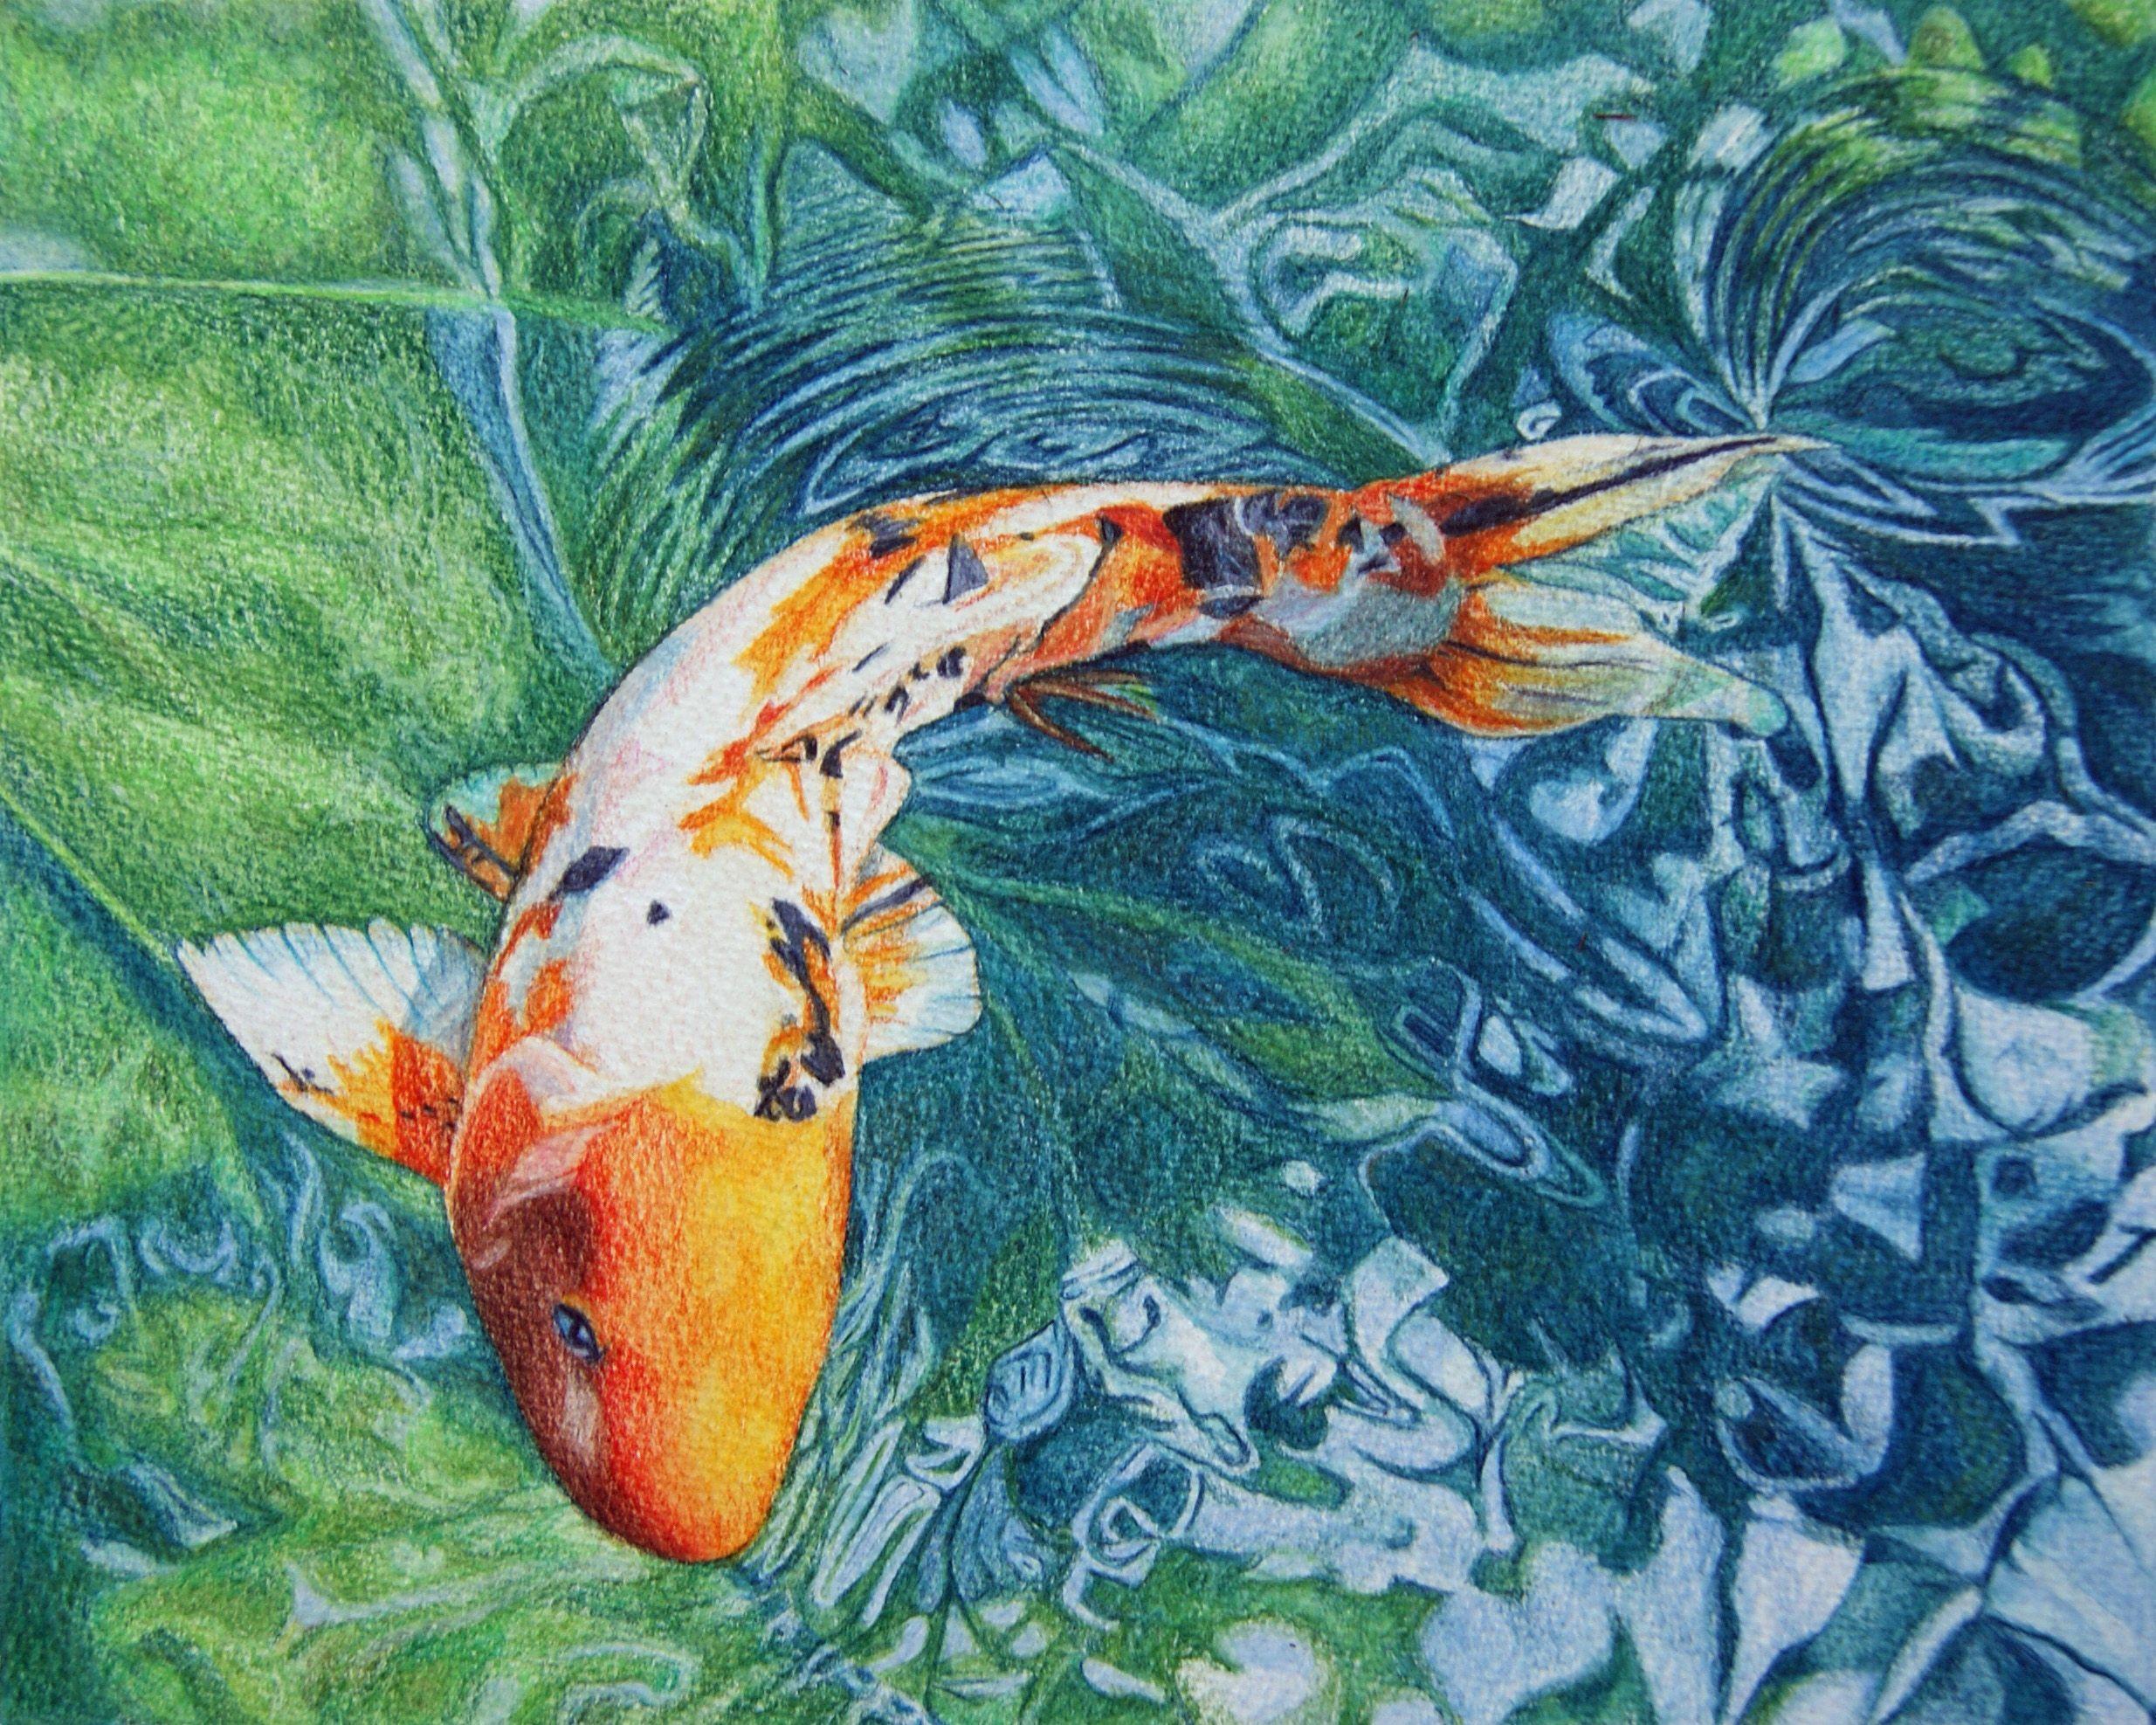 Japanese Koi Fish Art Wallpapers - Top Free Japanese Koi Fish Art